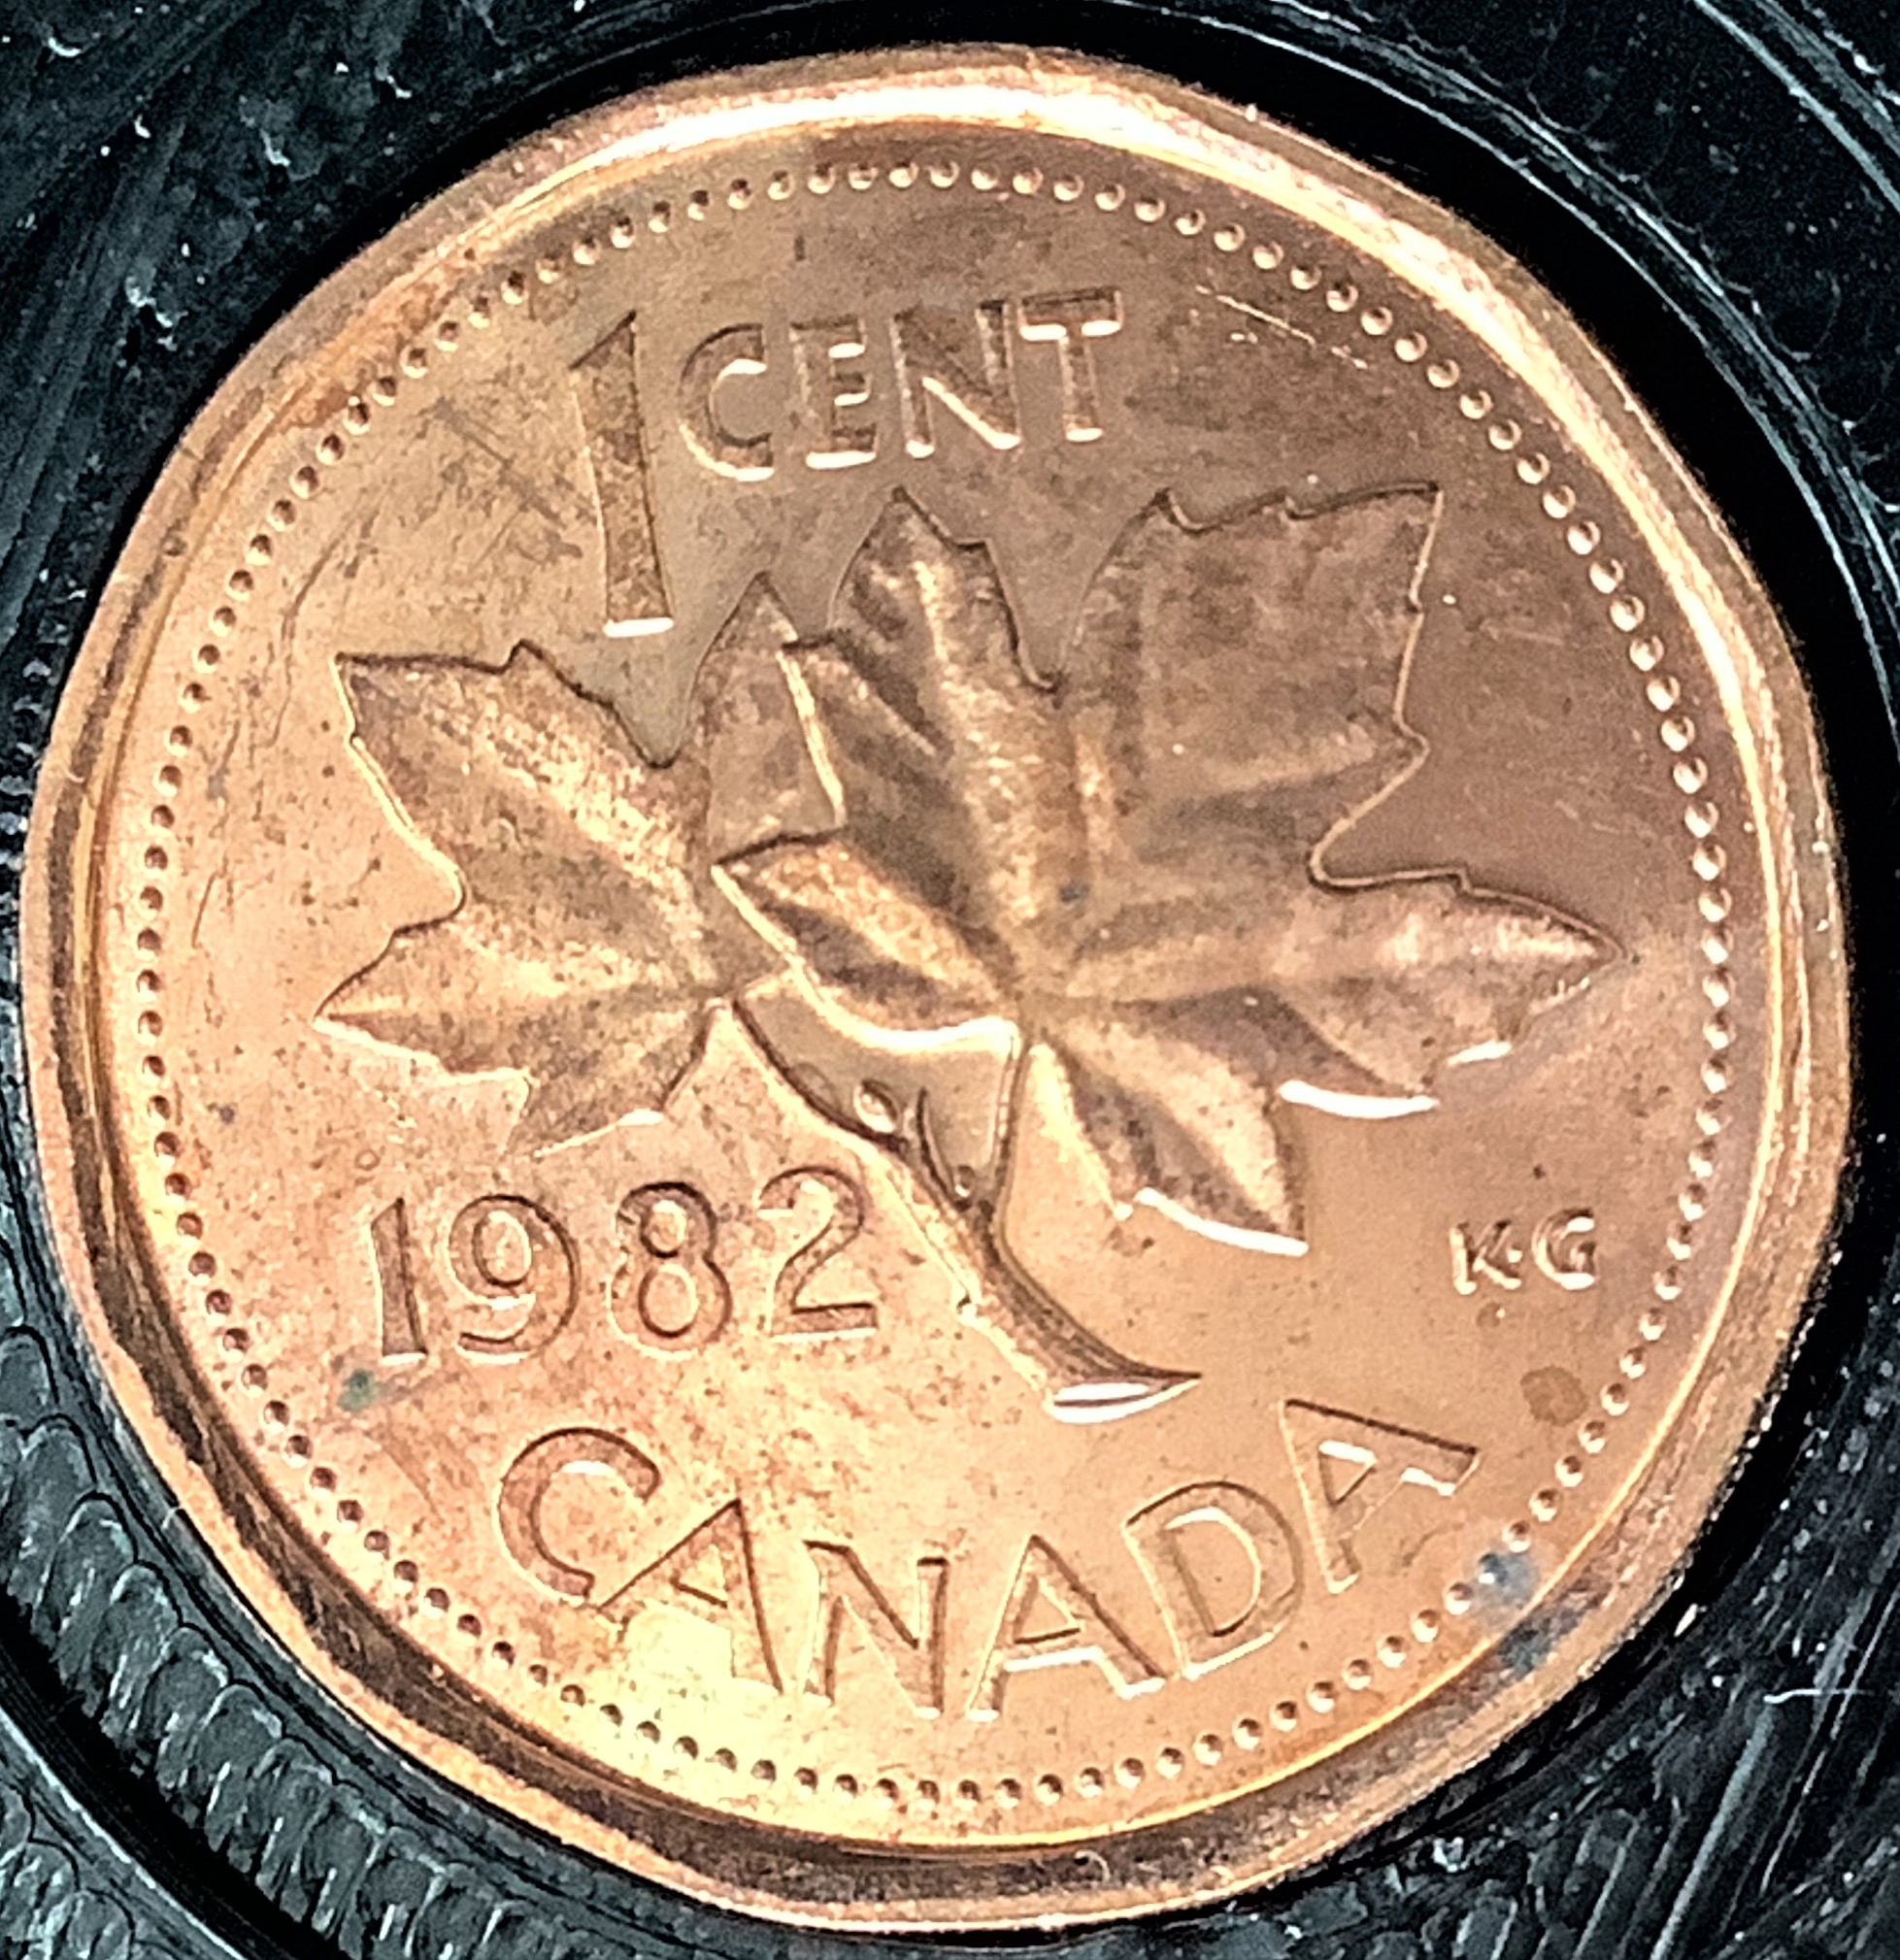 1 cent 1982 hanging 2.jpg